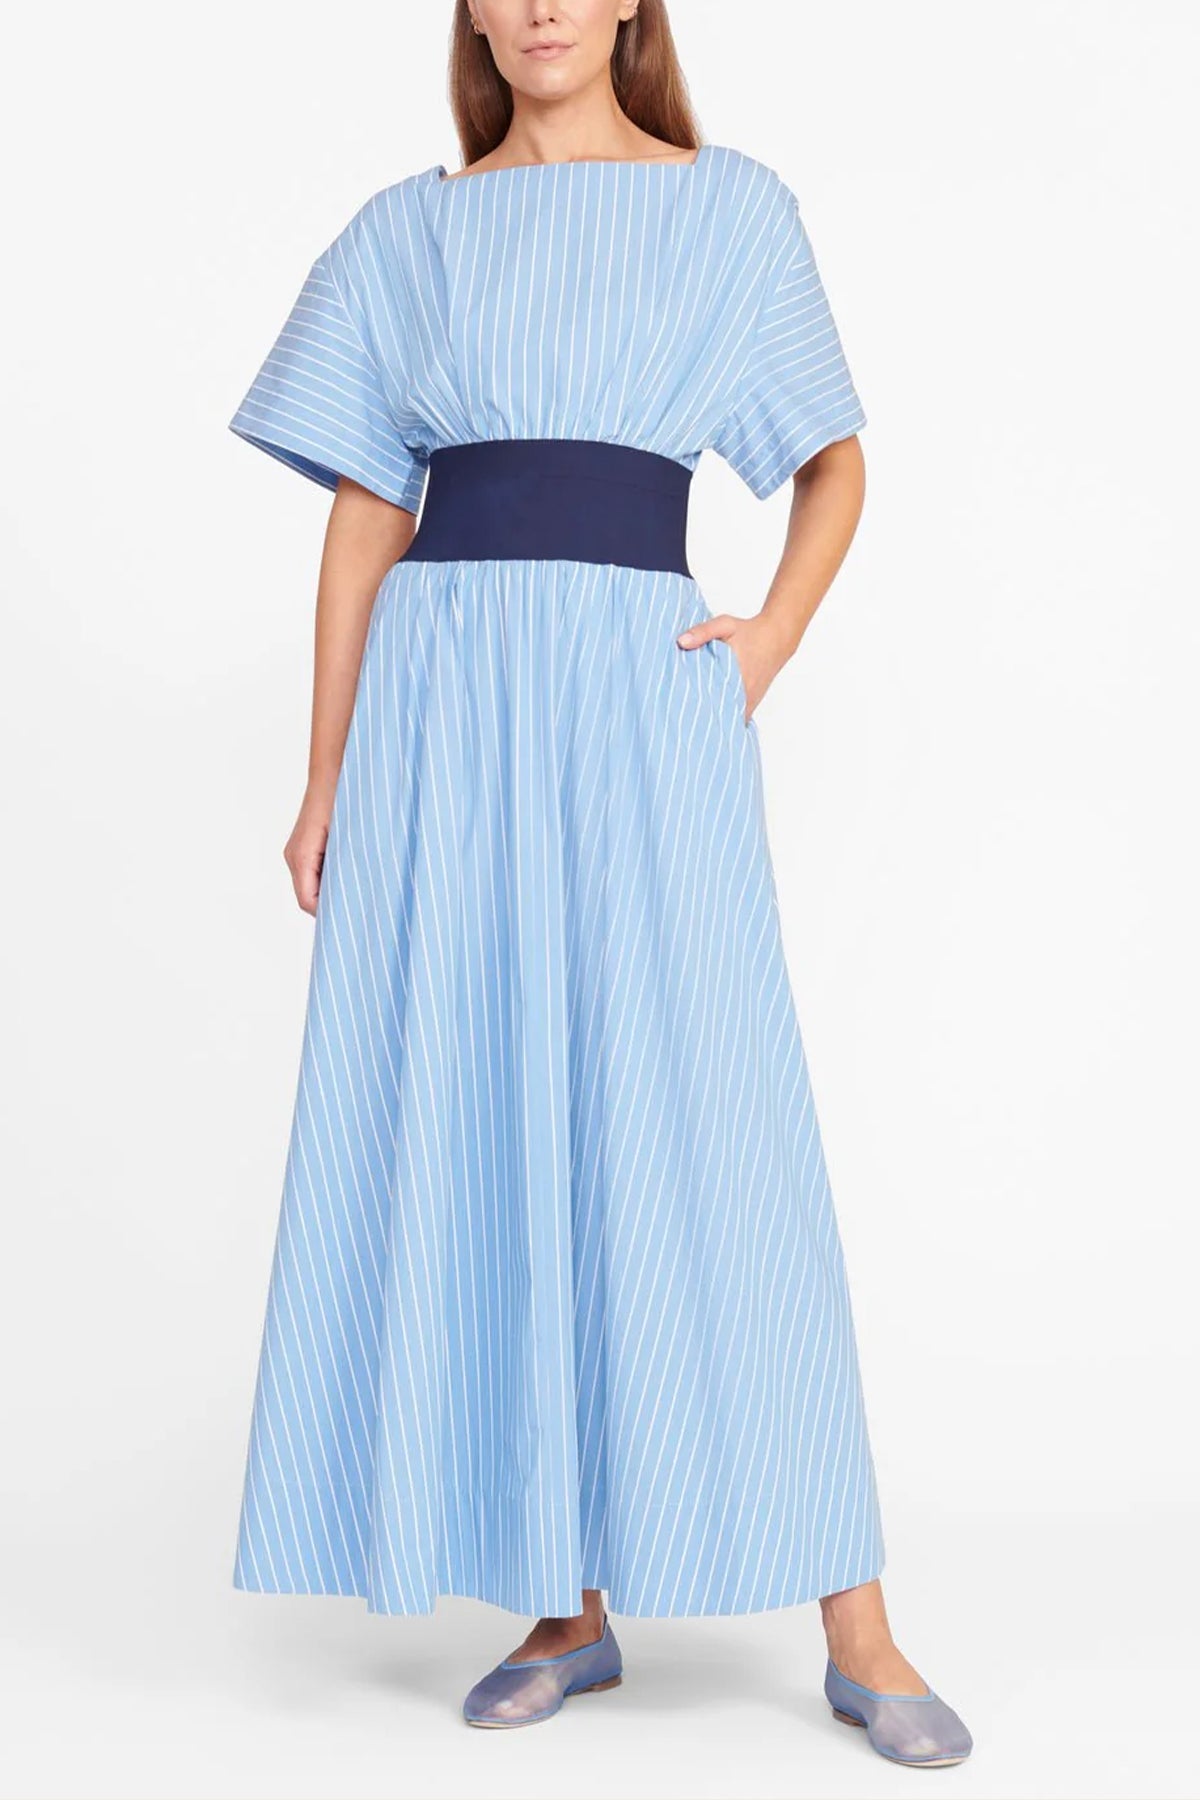 Amy Dress in Azure Pinstripe - shop-olivia.com